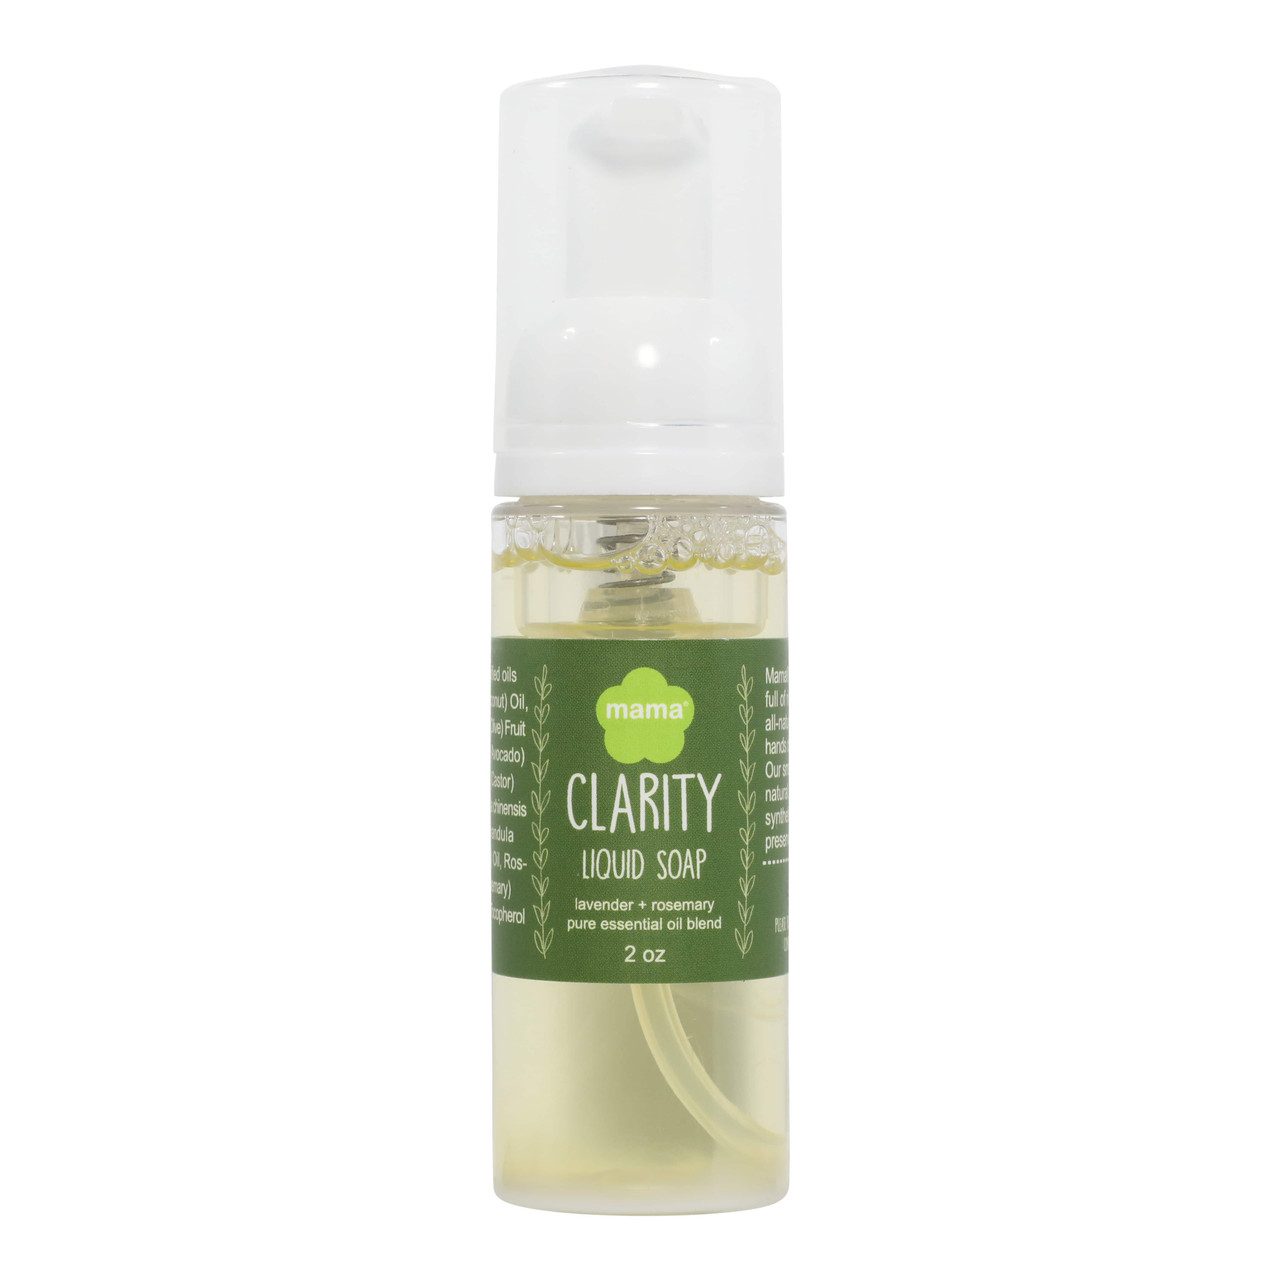 Clarity (Lavender + Rosemary) Travel Size Liquid Soap | Mama Bath + Body